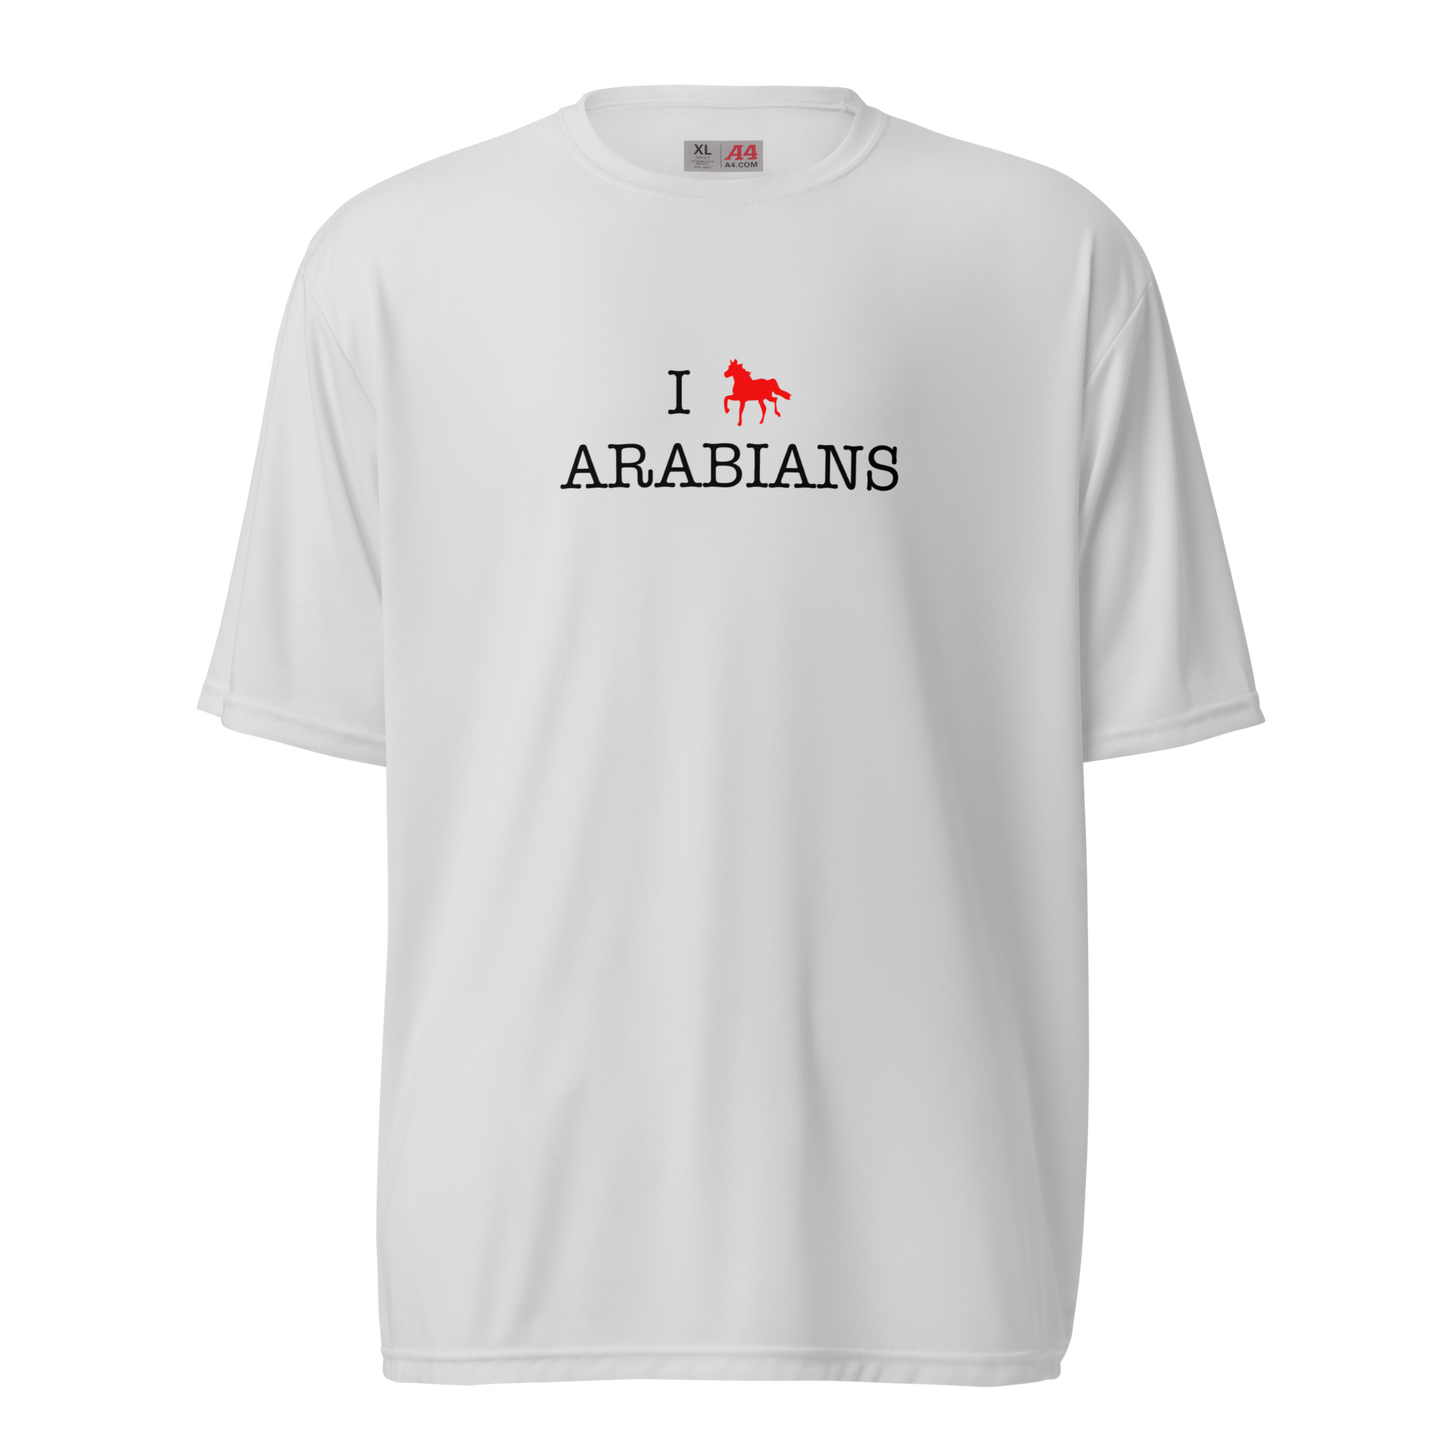 I love Arabians Unisex performance crew neck t-shirt